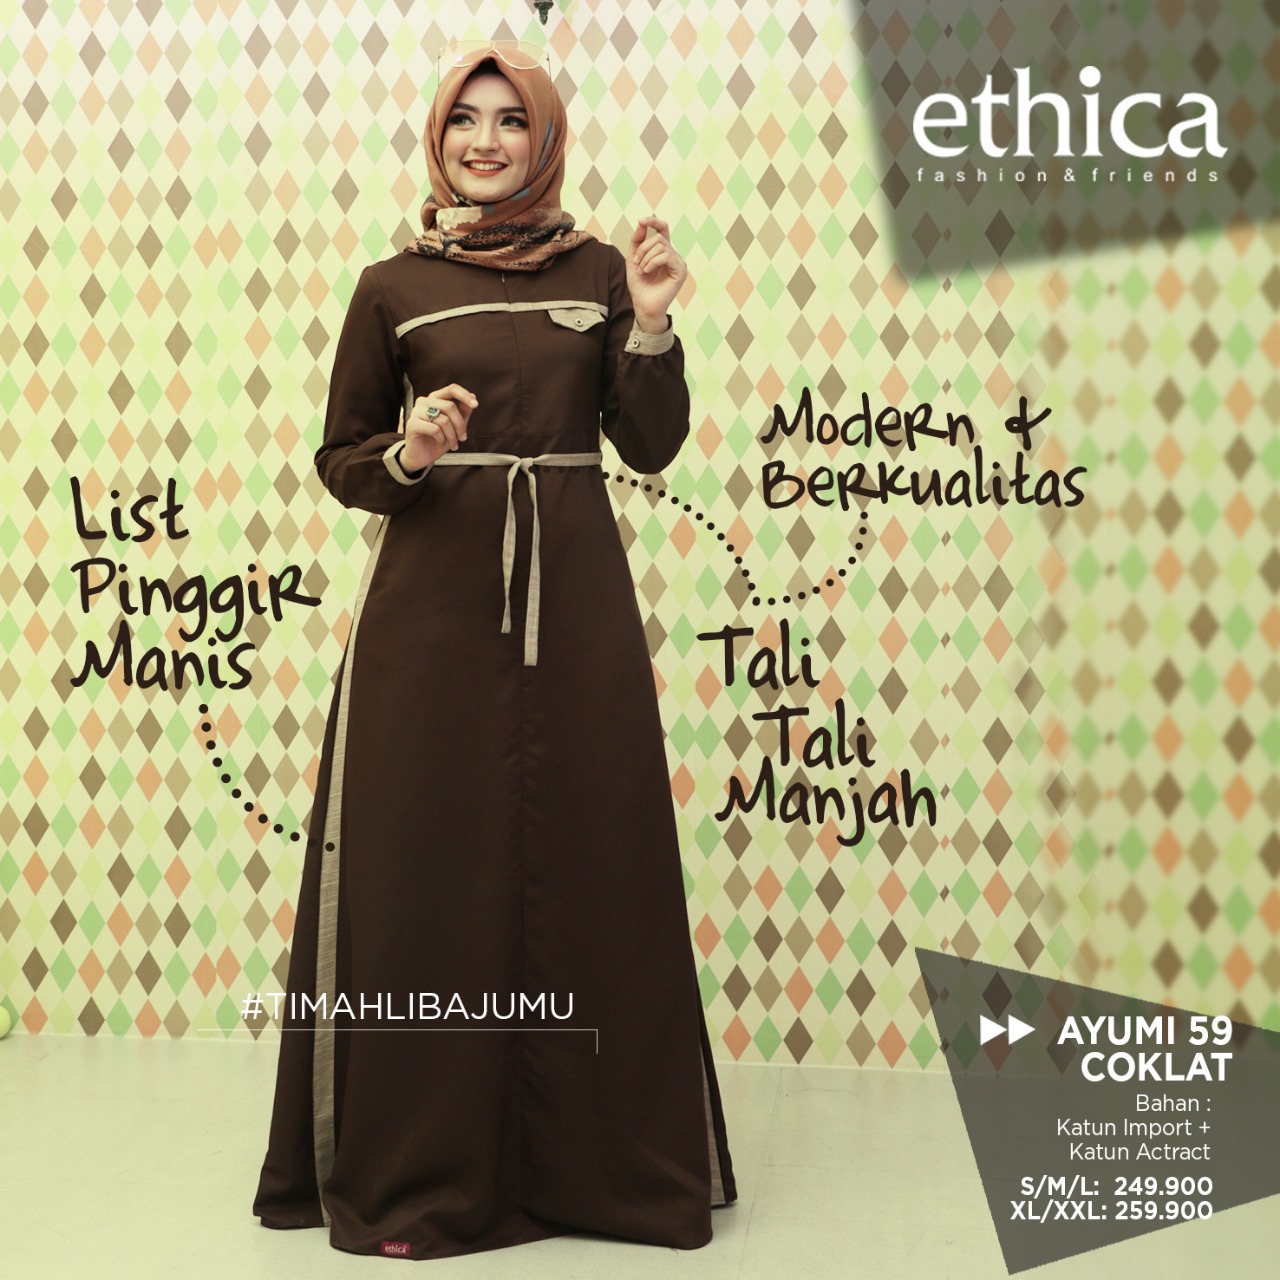 baju muslim promo gamis ethica terbaru ayumi